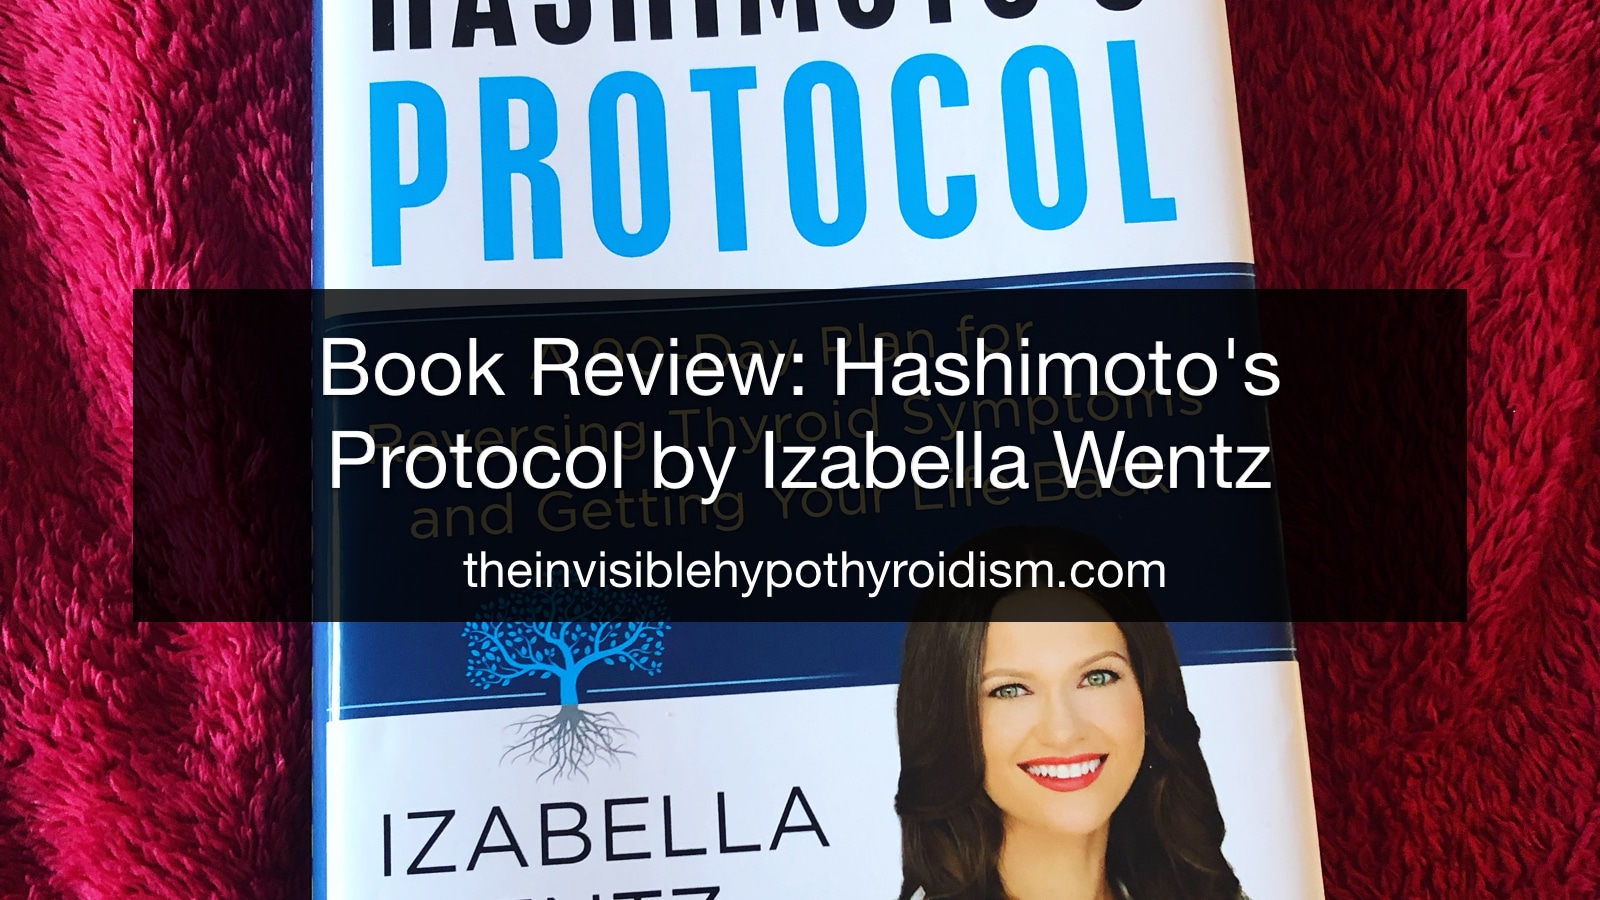 Book Review: Hashimoto's Protocol by Izabella Wentz